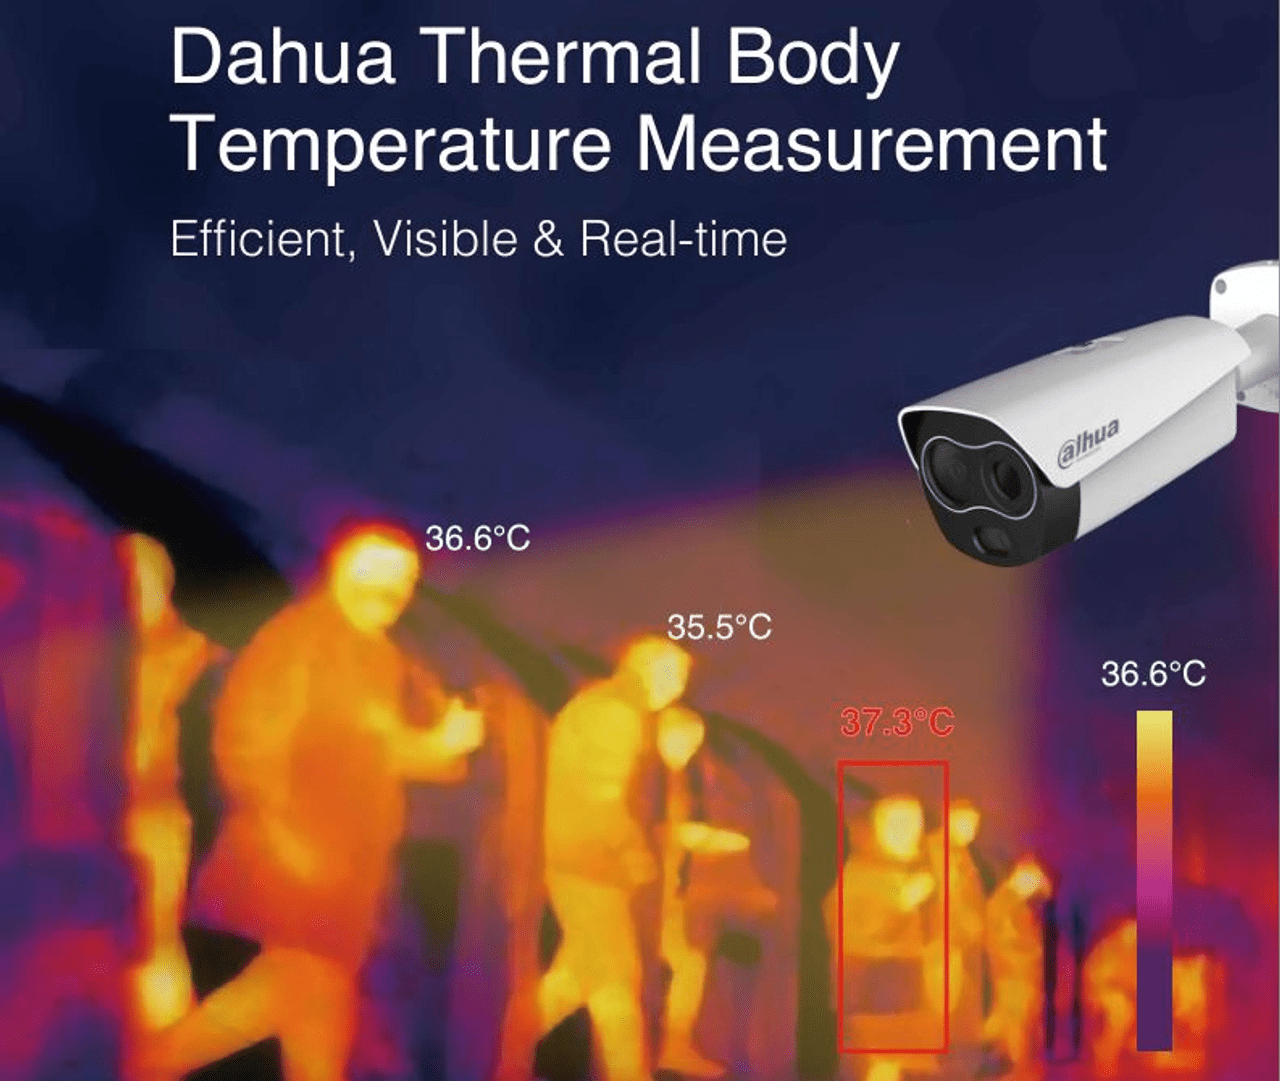 Dahua Thermal Body Temperature